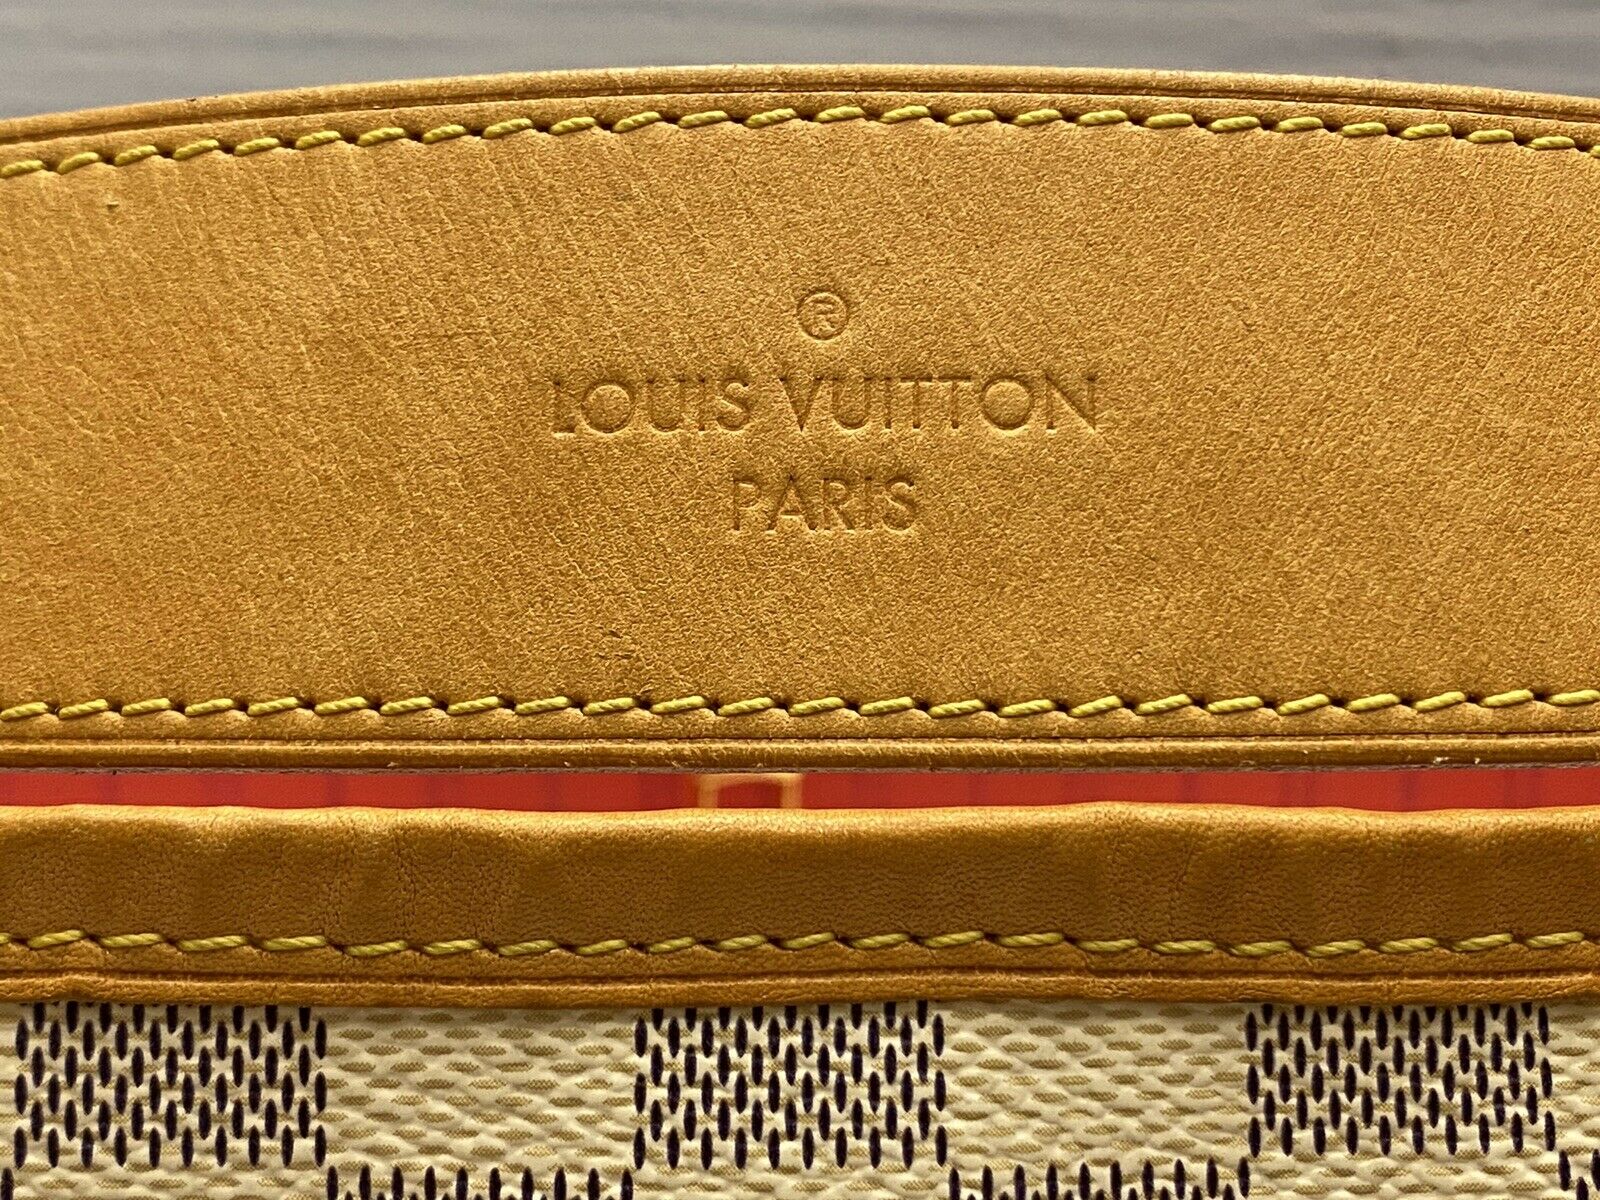 ❤️‍🩹SOLD❤️‍🩹 Louis Vuitton Delightful MM Damier Azur NM Hot